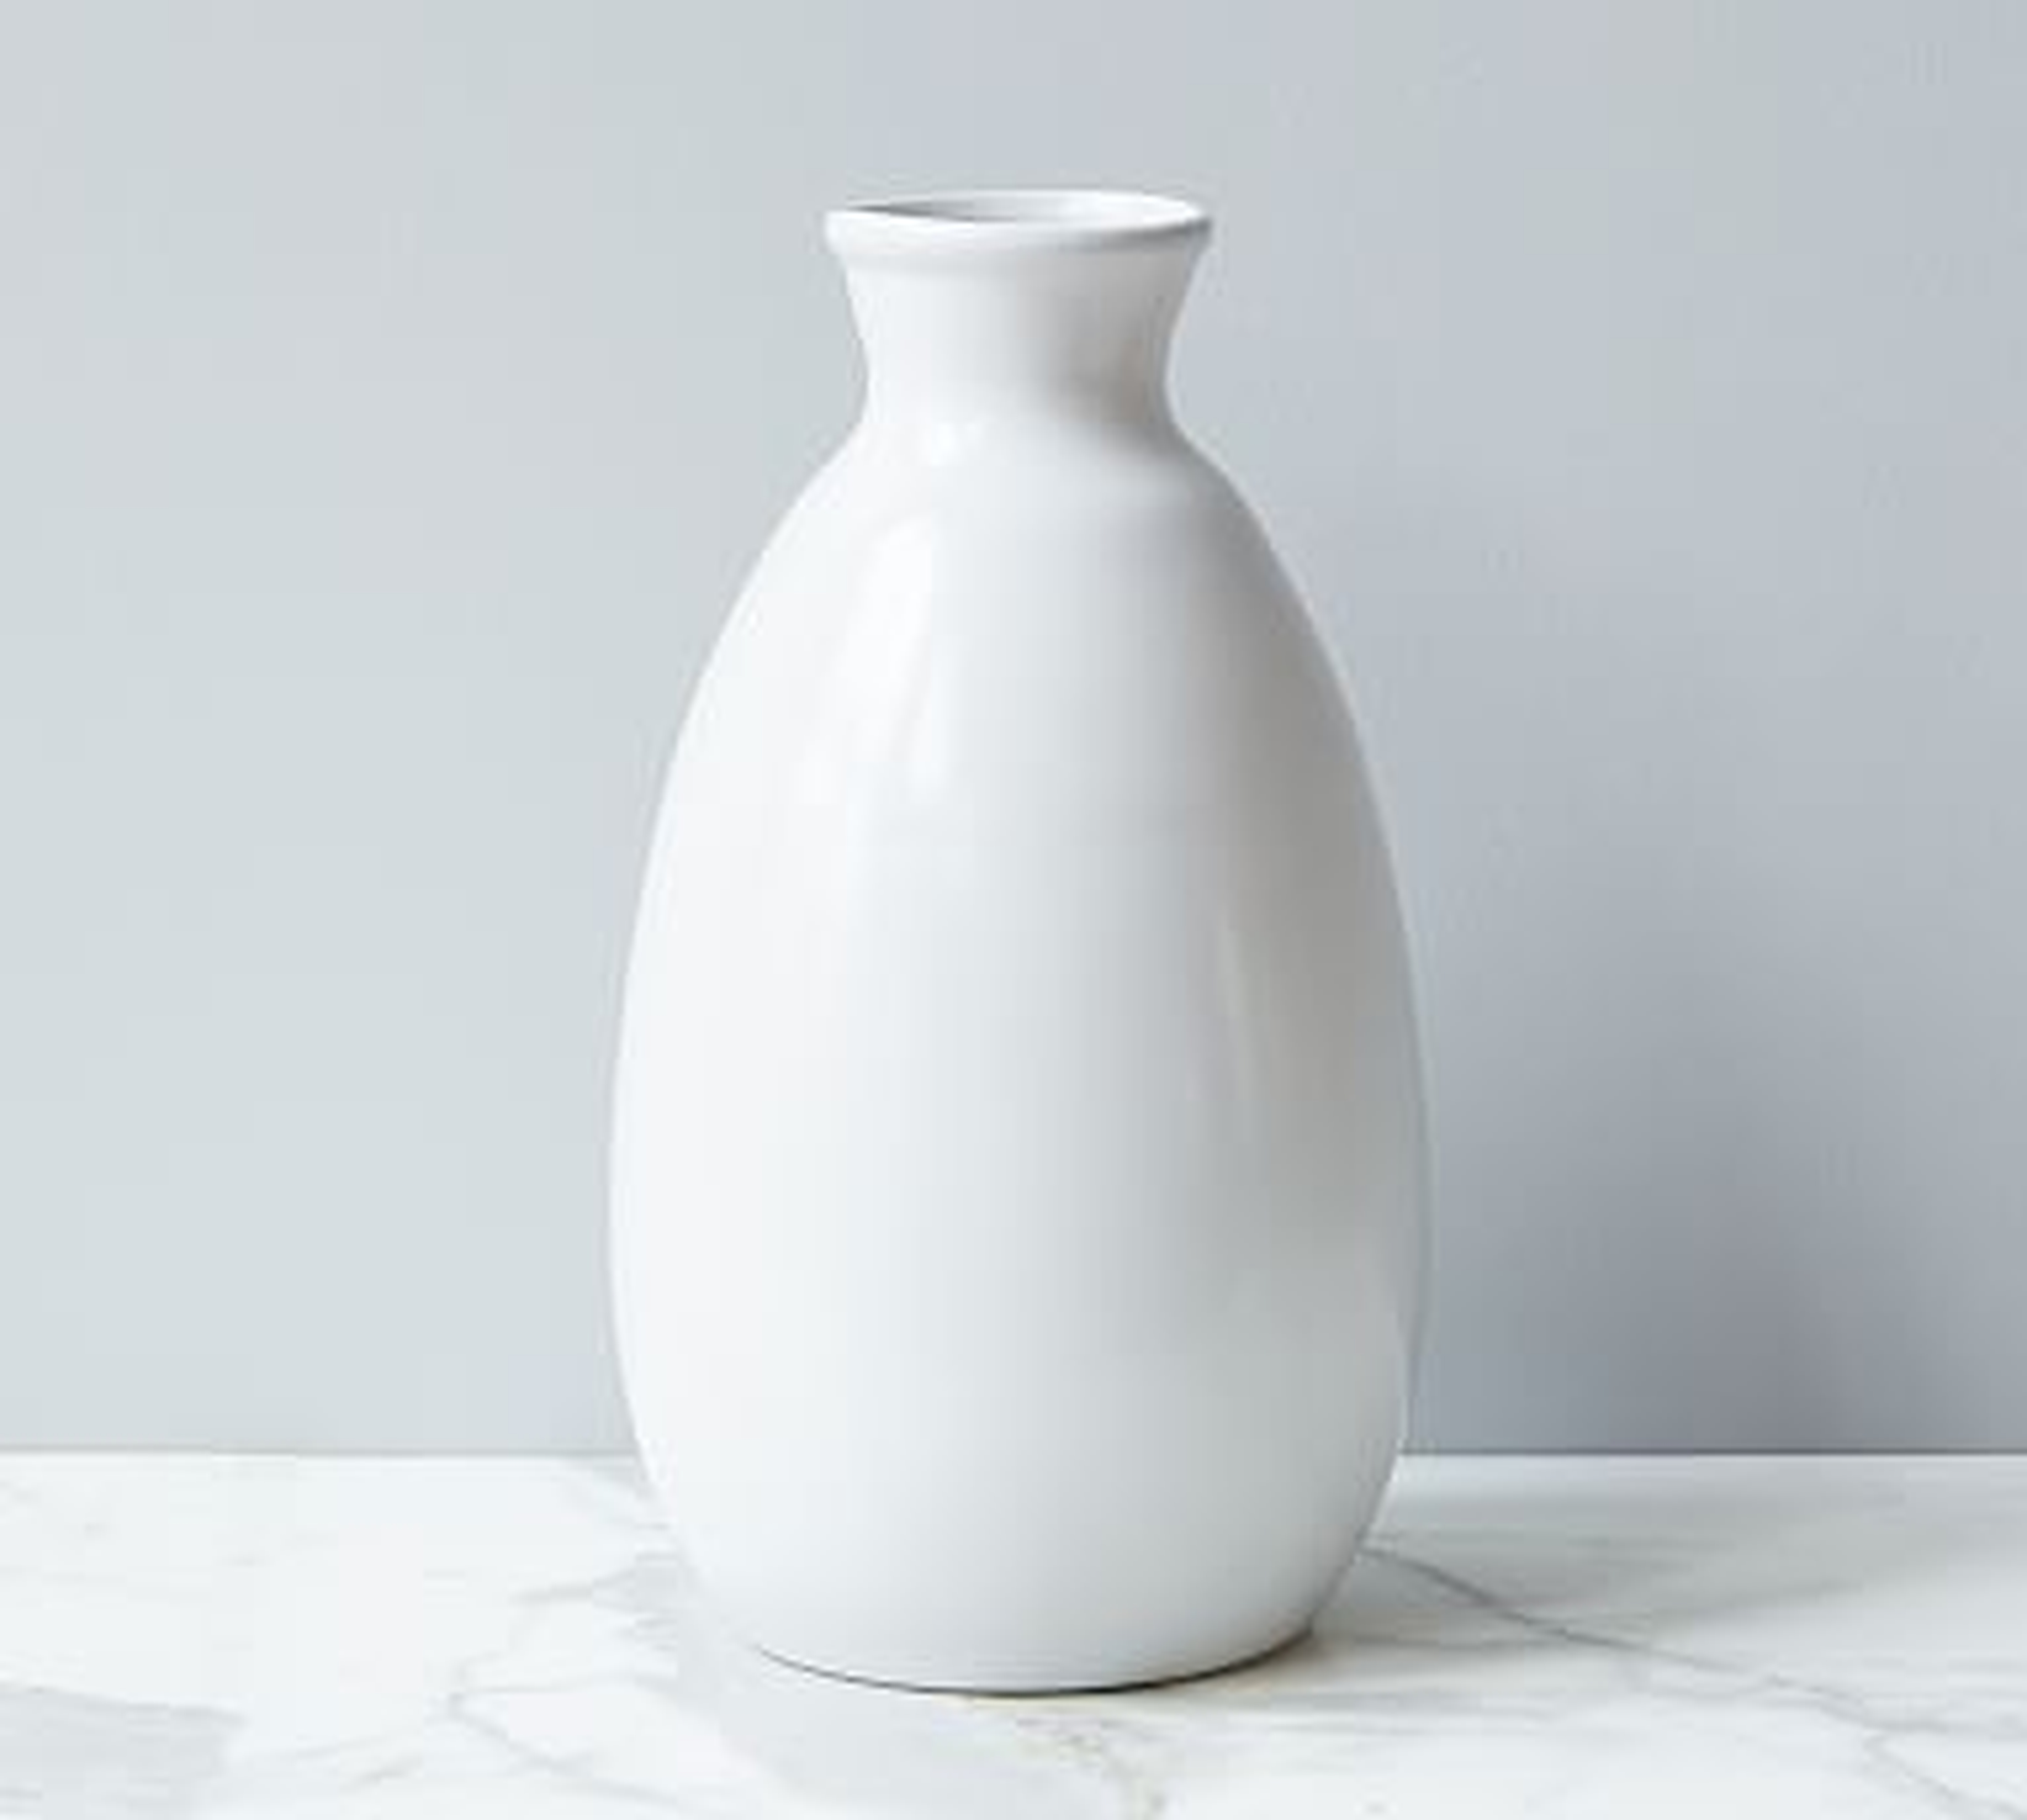 Artisanal Ceramic Vase, Small, Light Gray - Pottery Barn